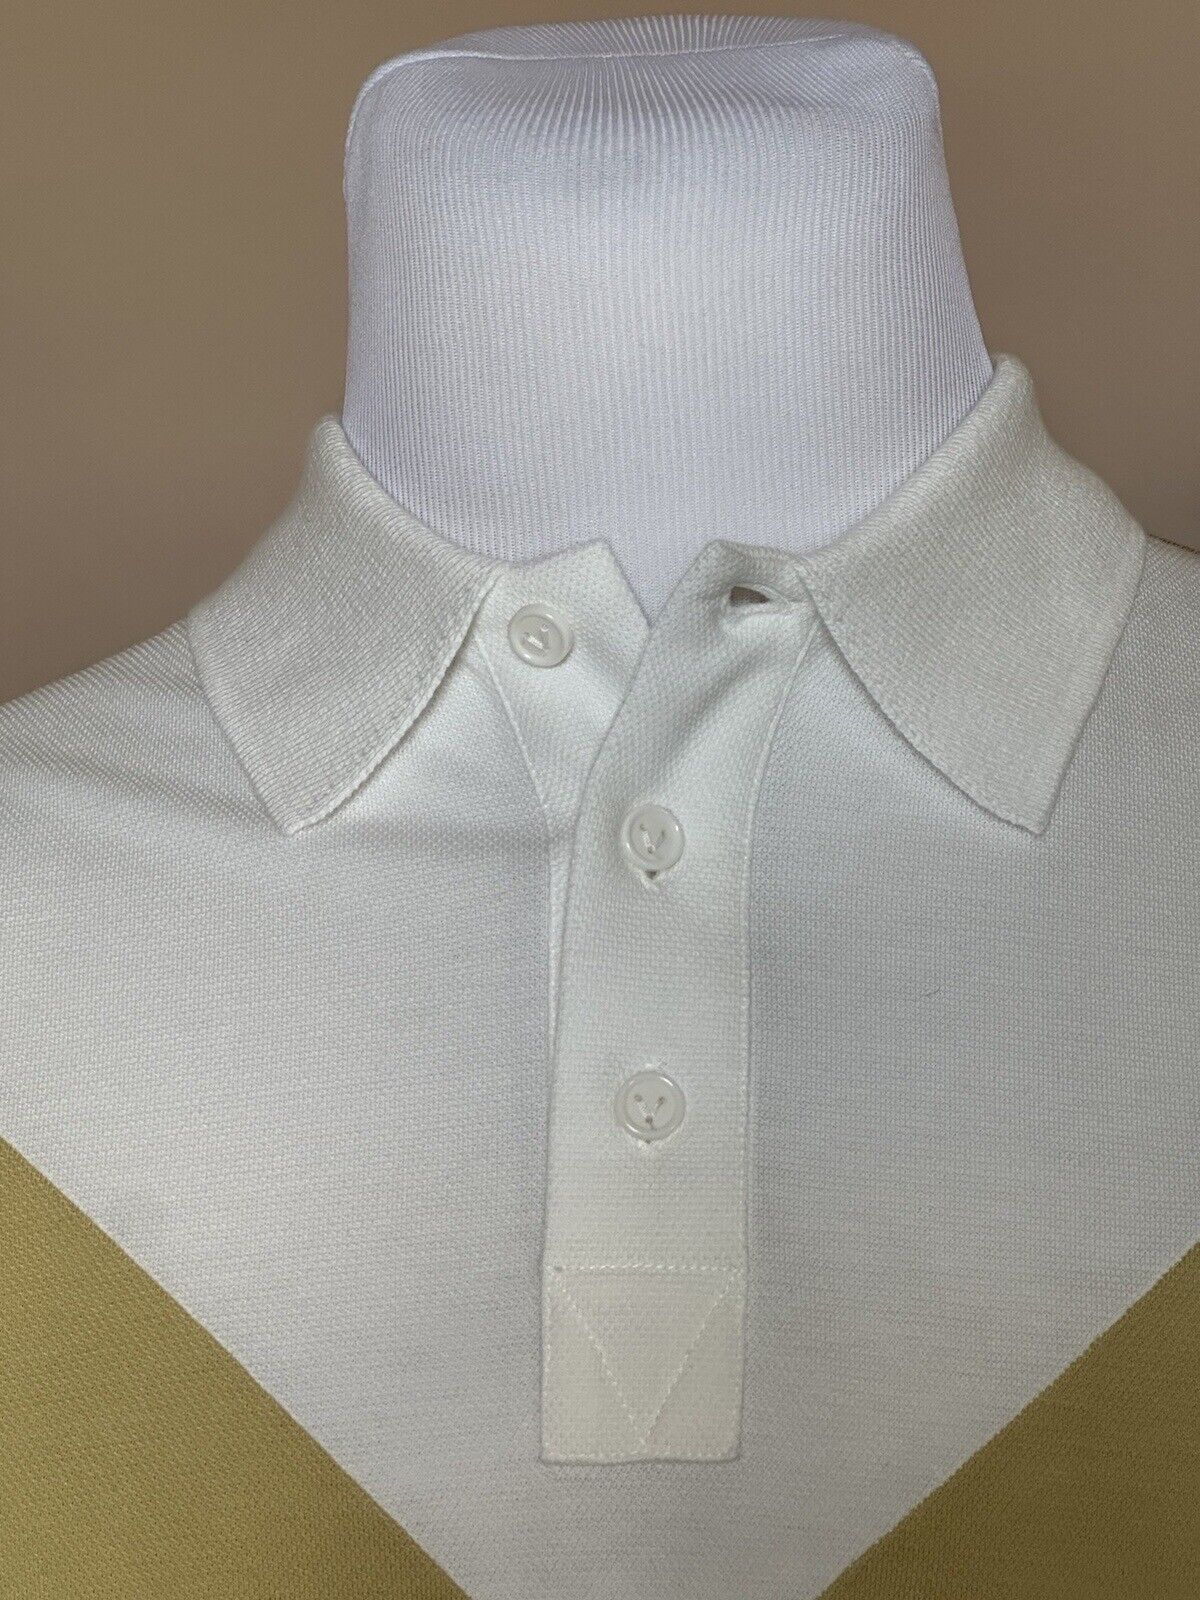 NWT $700 Bottega Veneta Men’s Cotton Piquet Polo Shirt M (Oversized Fit) 704205